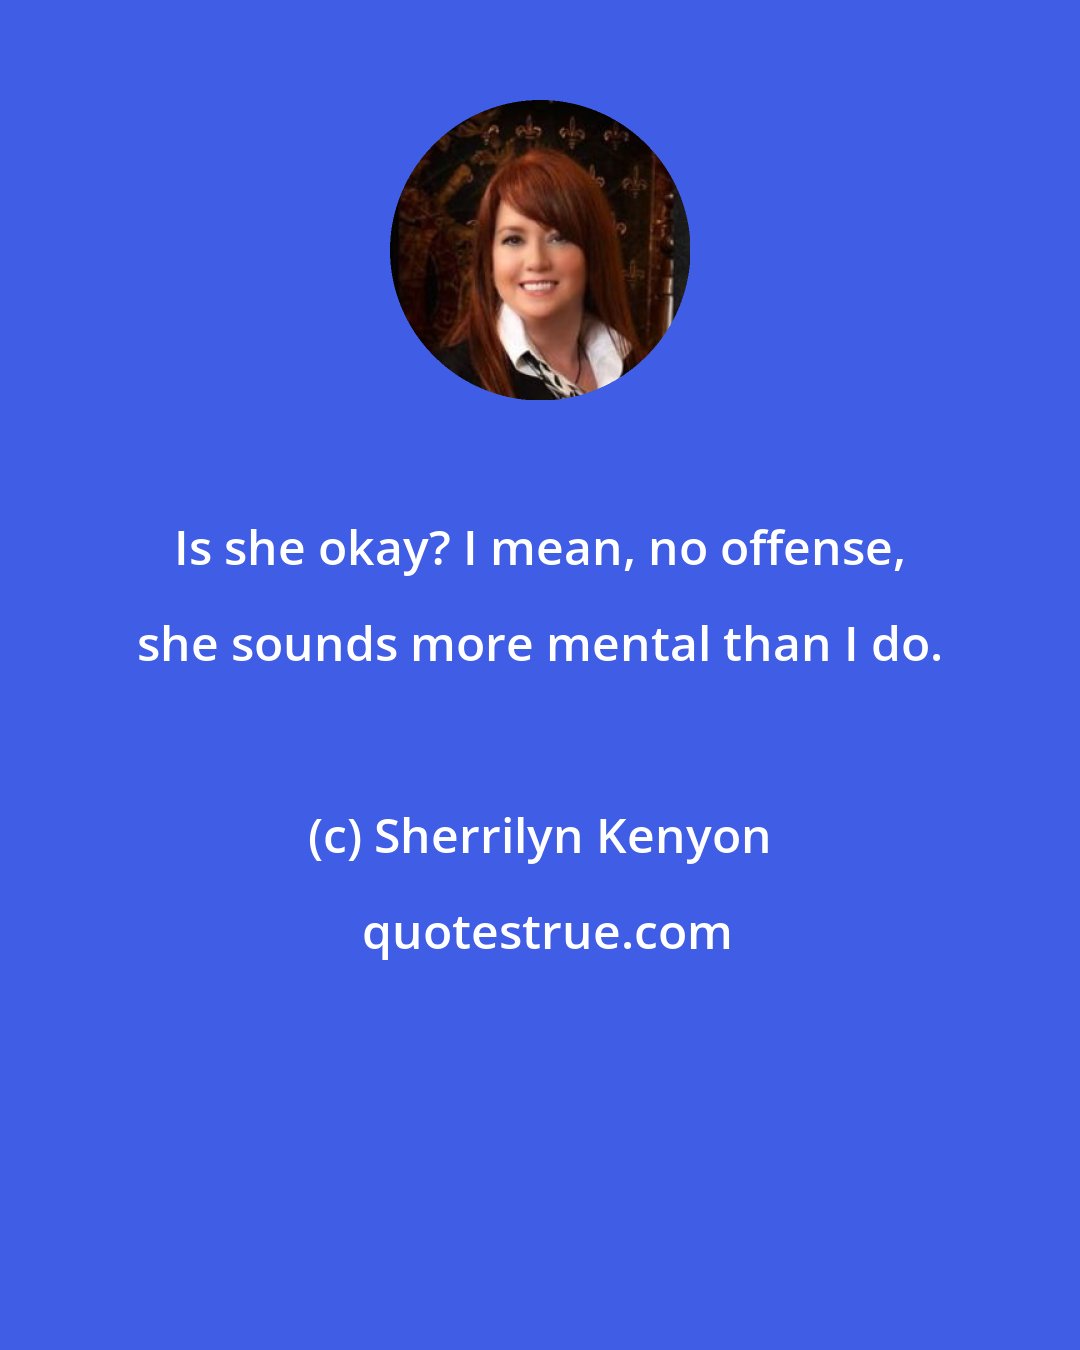 Sherrilyn Kenyon: Is she okay? I mean, no offense, she sounds more mental than I do.